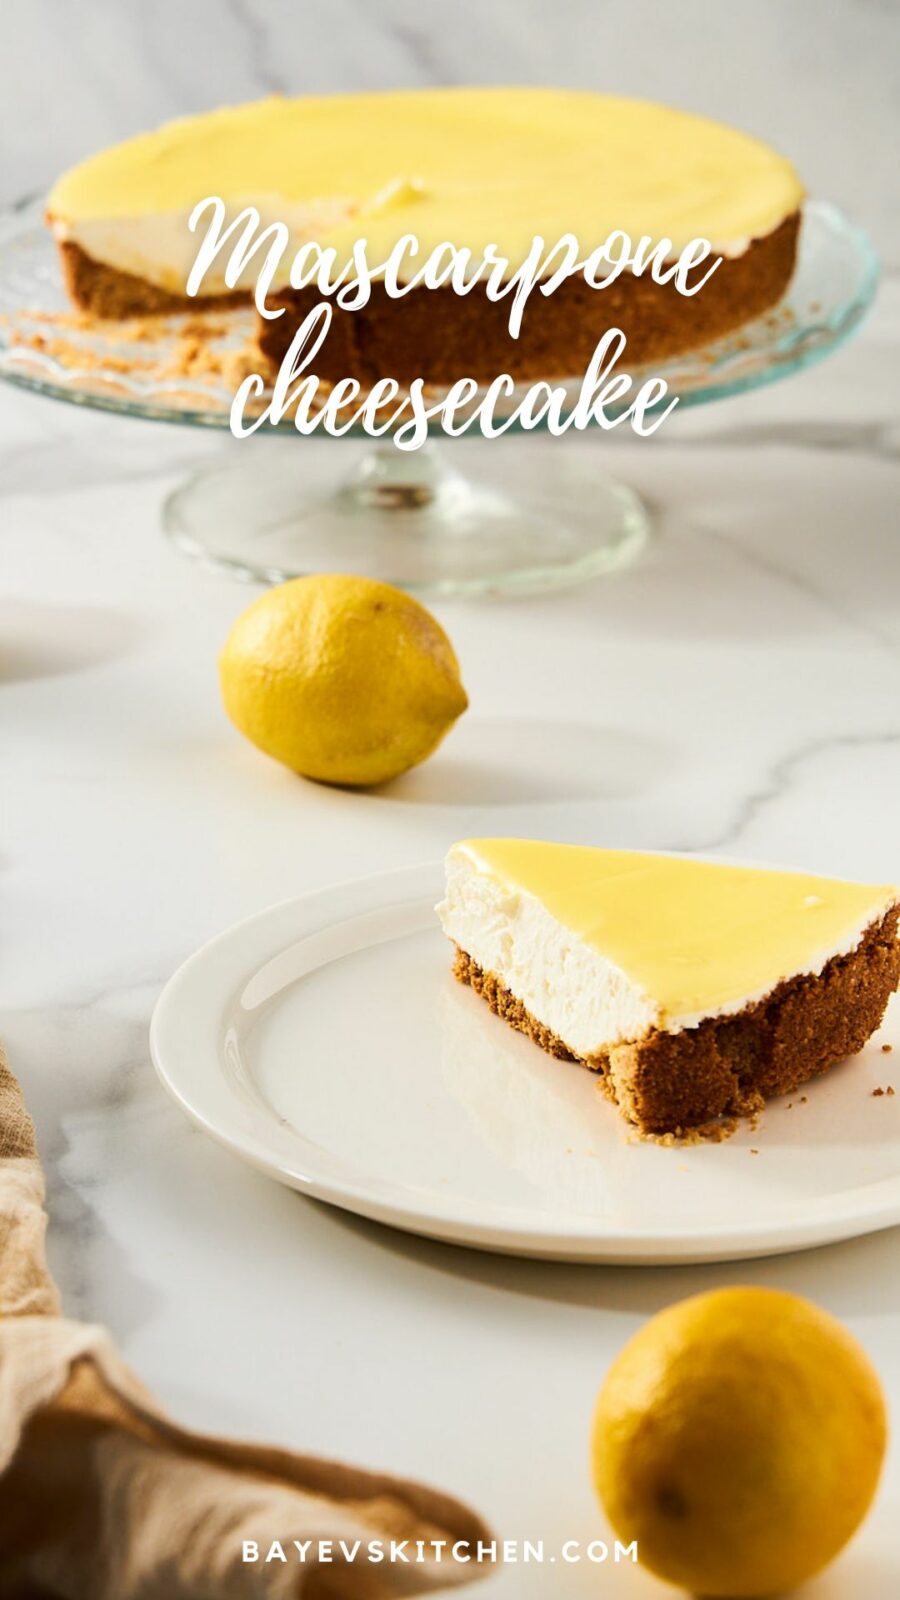 Mascarpone cheesecake by bayevskitchen.com